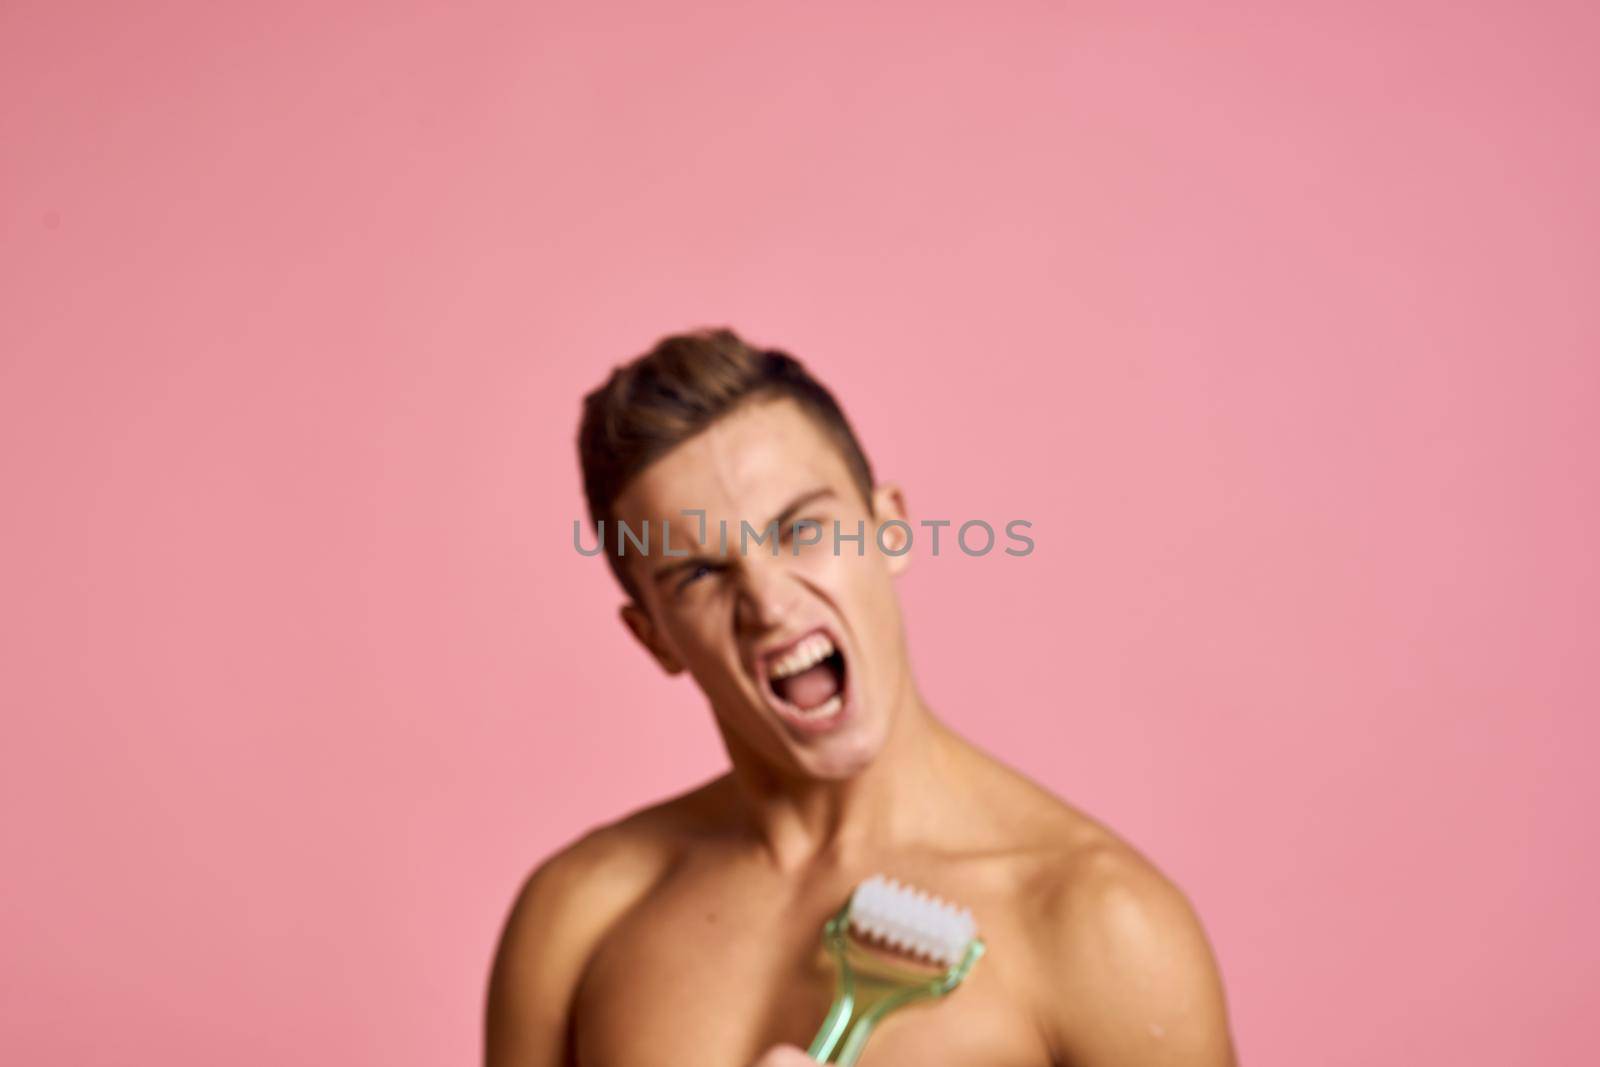 Cute man naked shoulders skin care hygiene pink background by SHOTPRIME